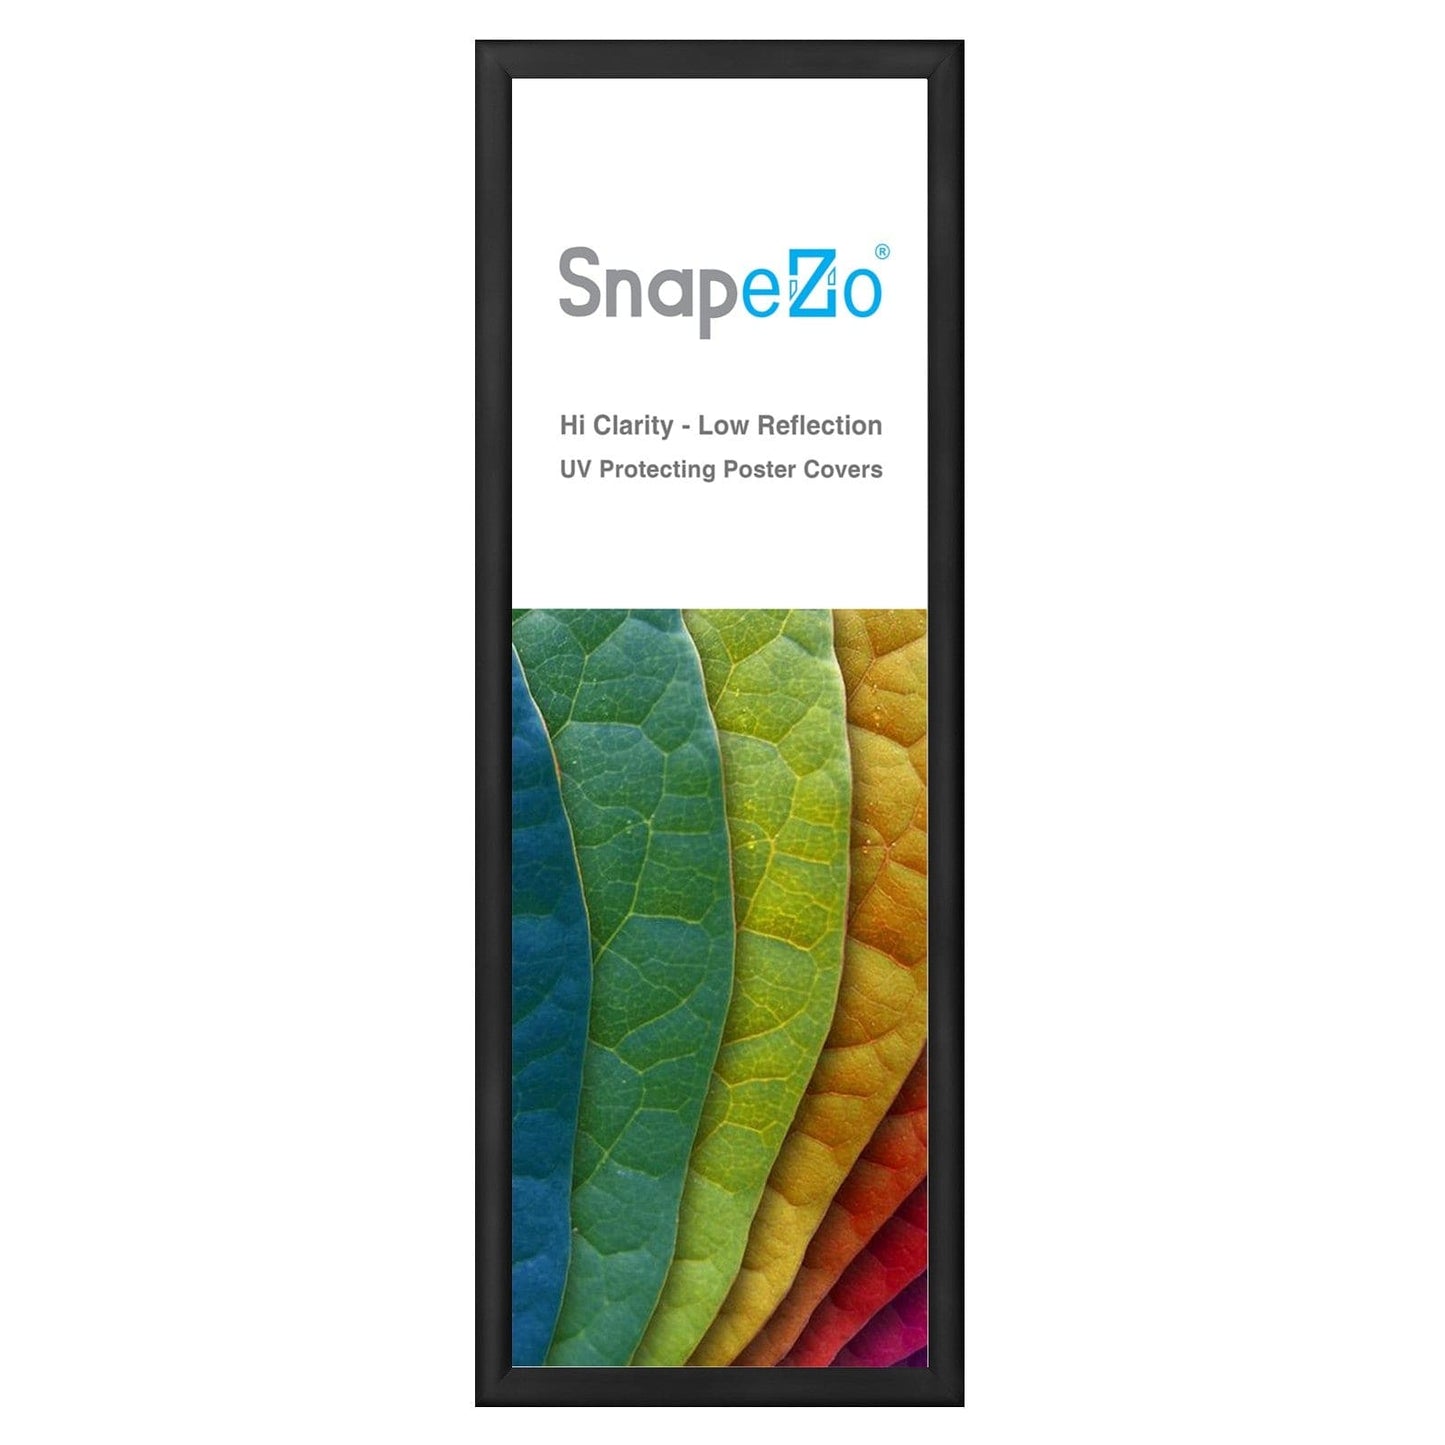 8x24 Black SnapeZo® Snap Frame - 1.2" Profile - Snap Frames Direct